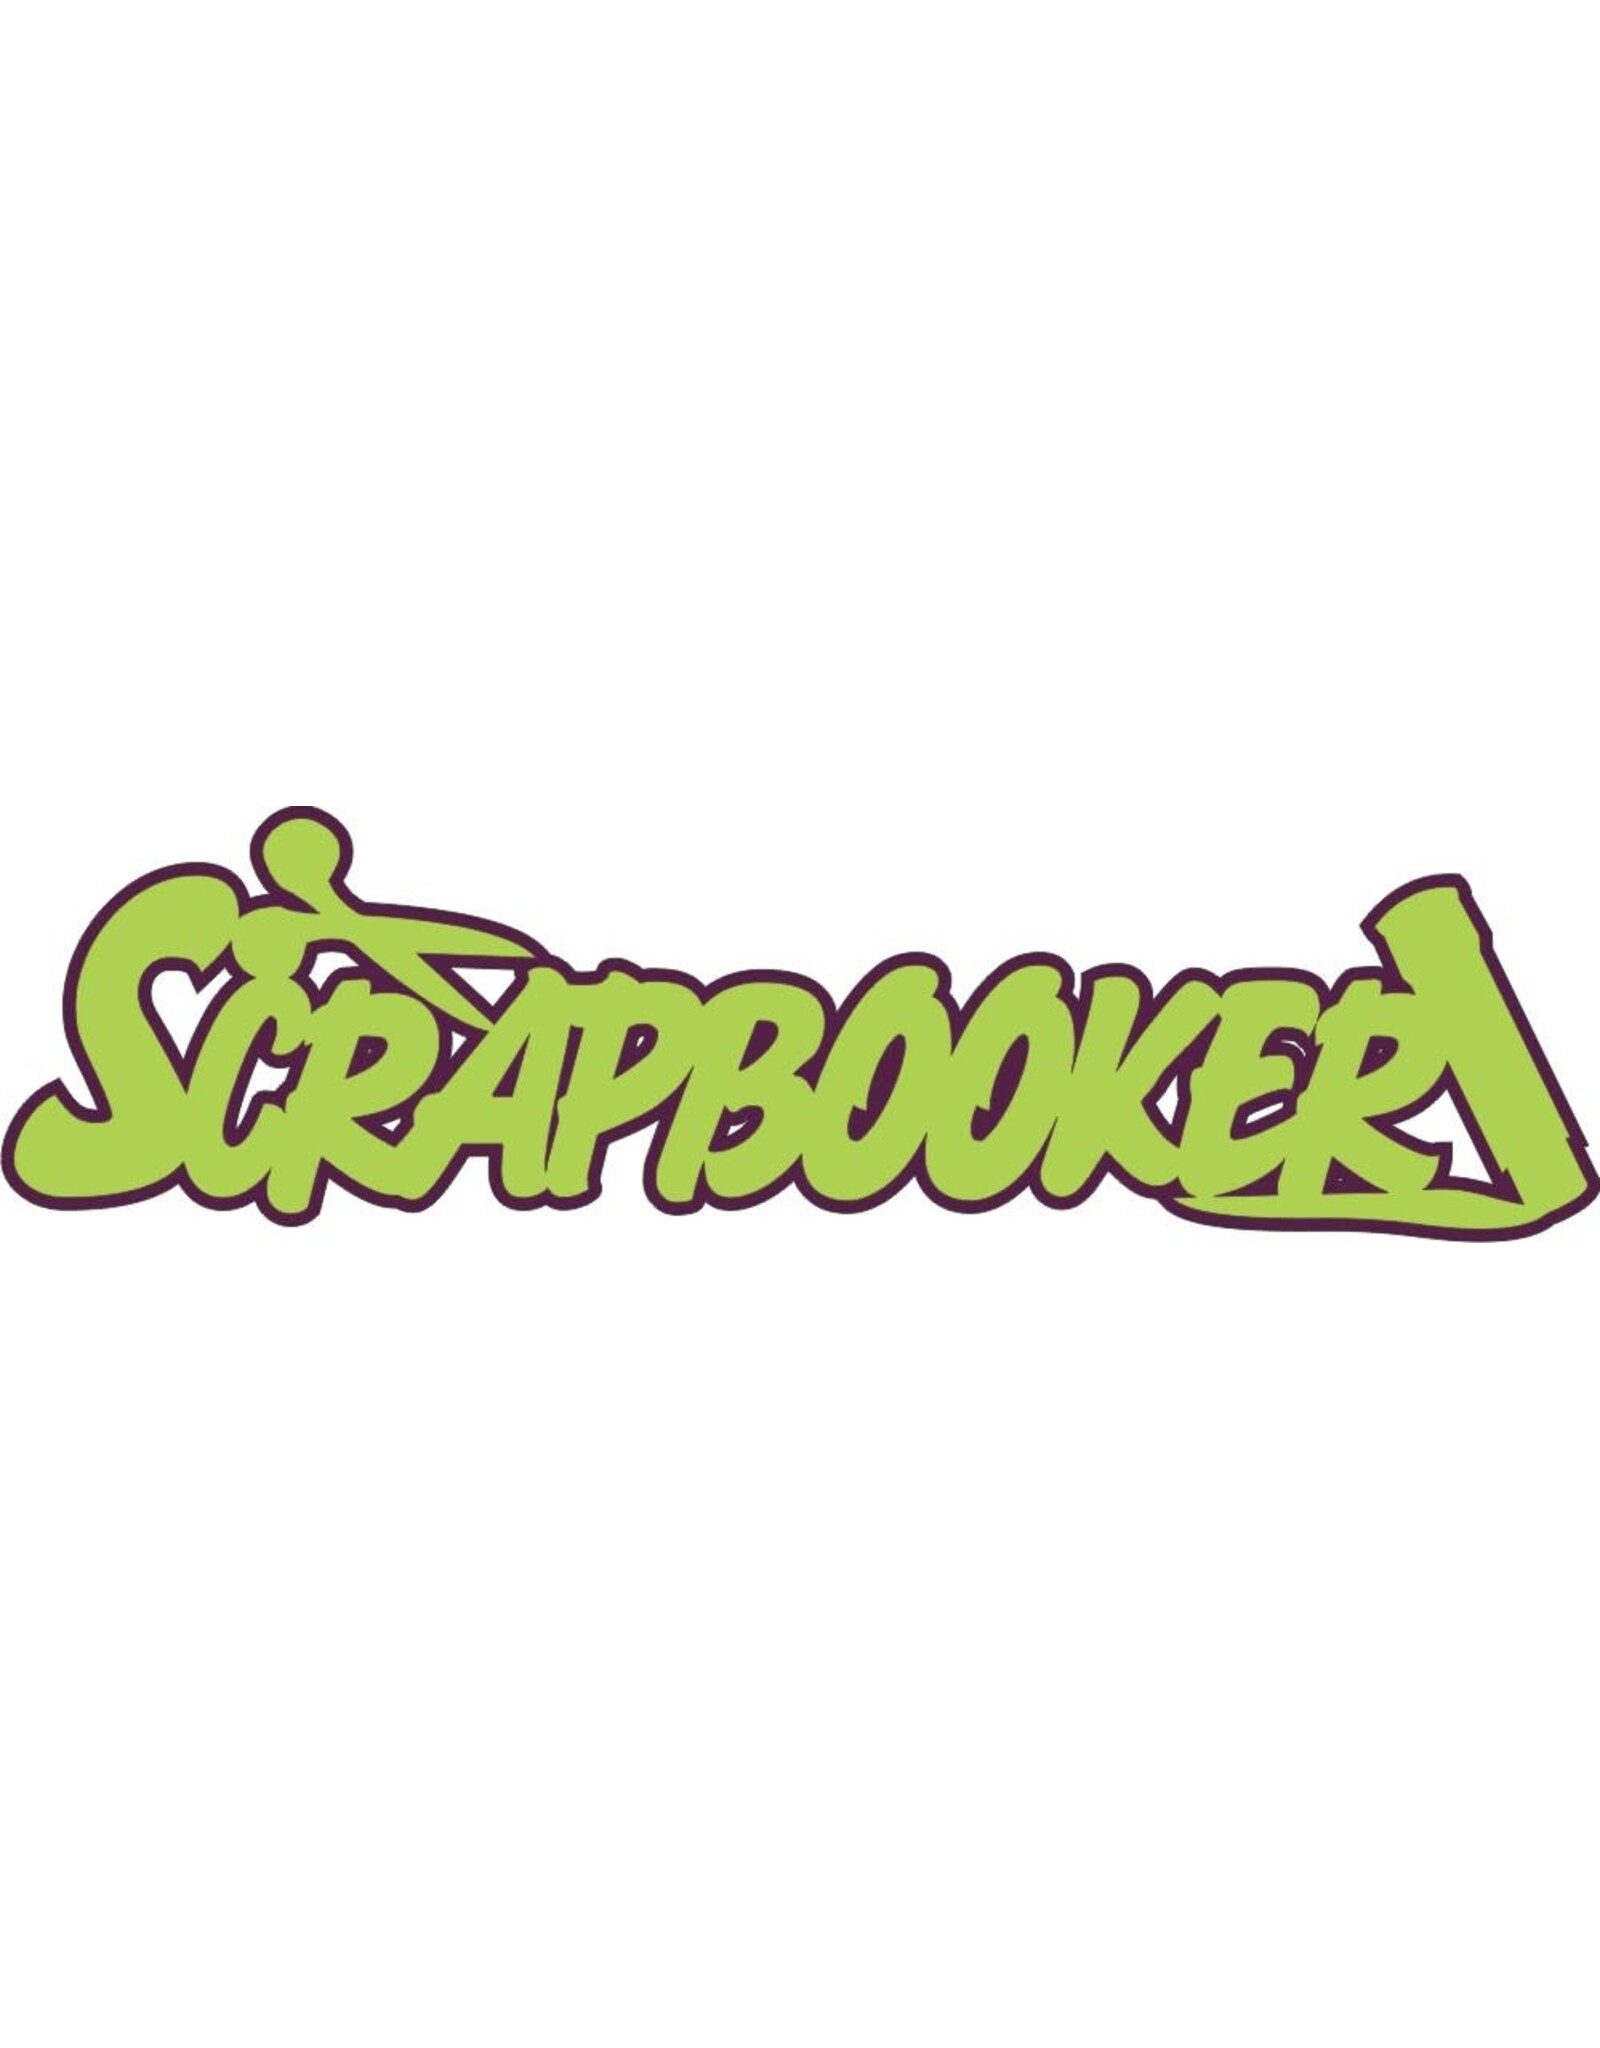 Scrapbooker Banner